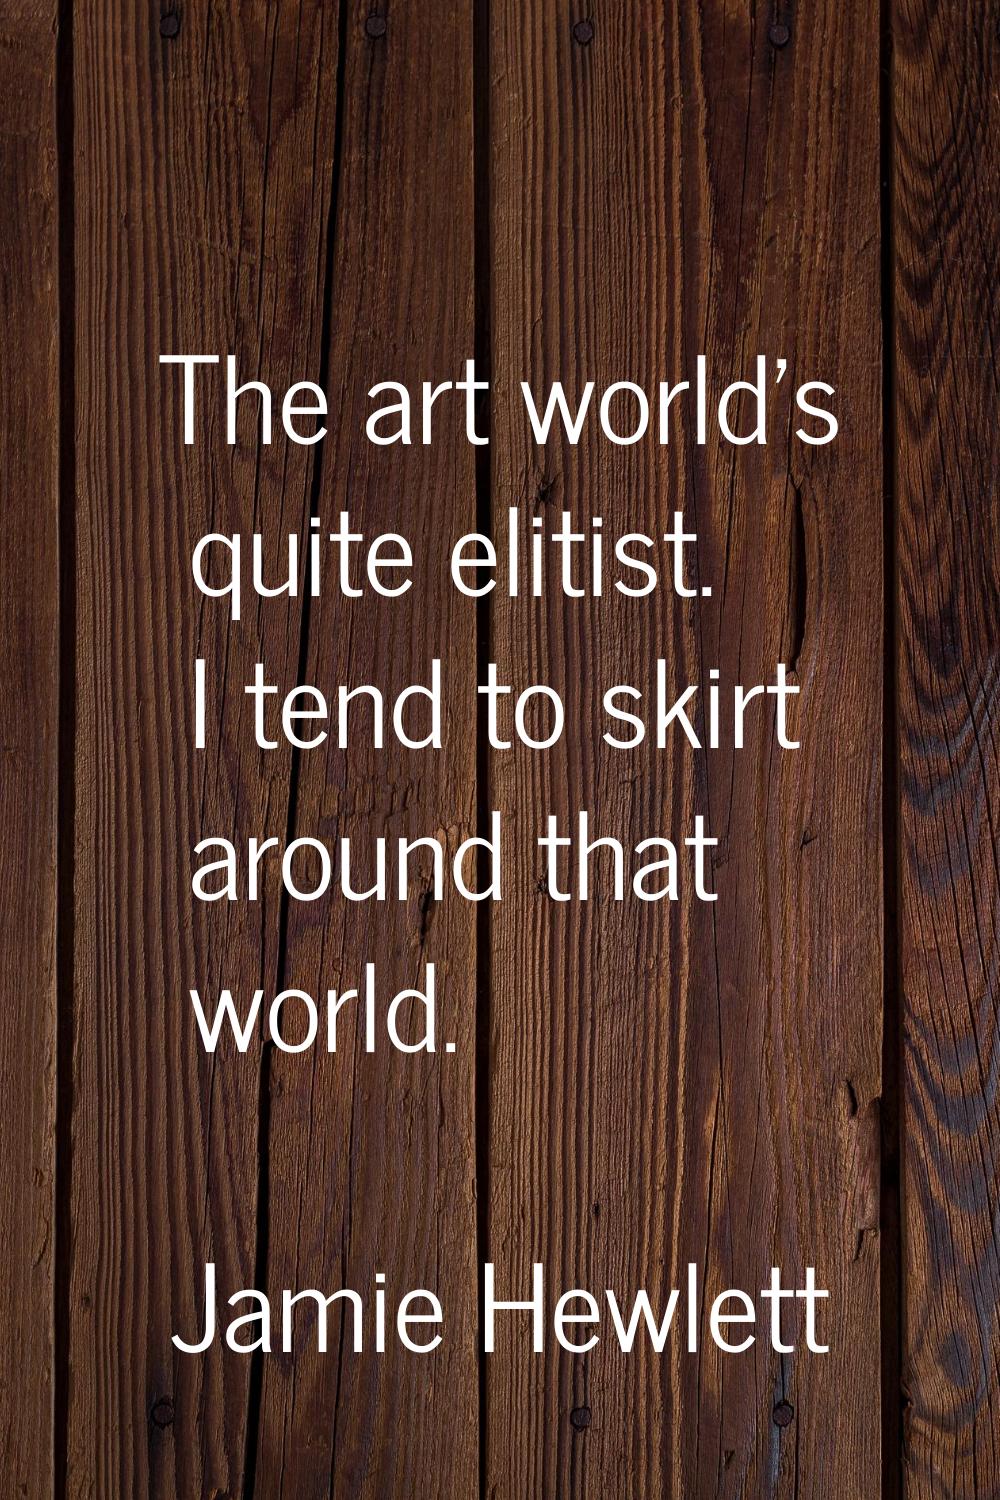 The art world's quite elitist. I tend to skirt around that world.